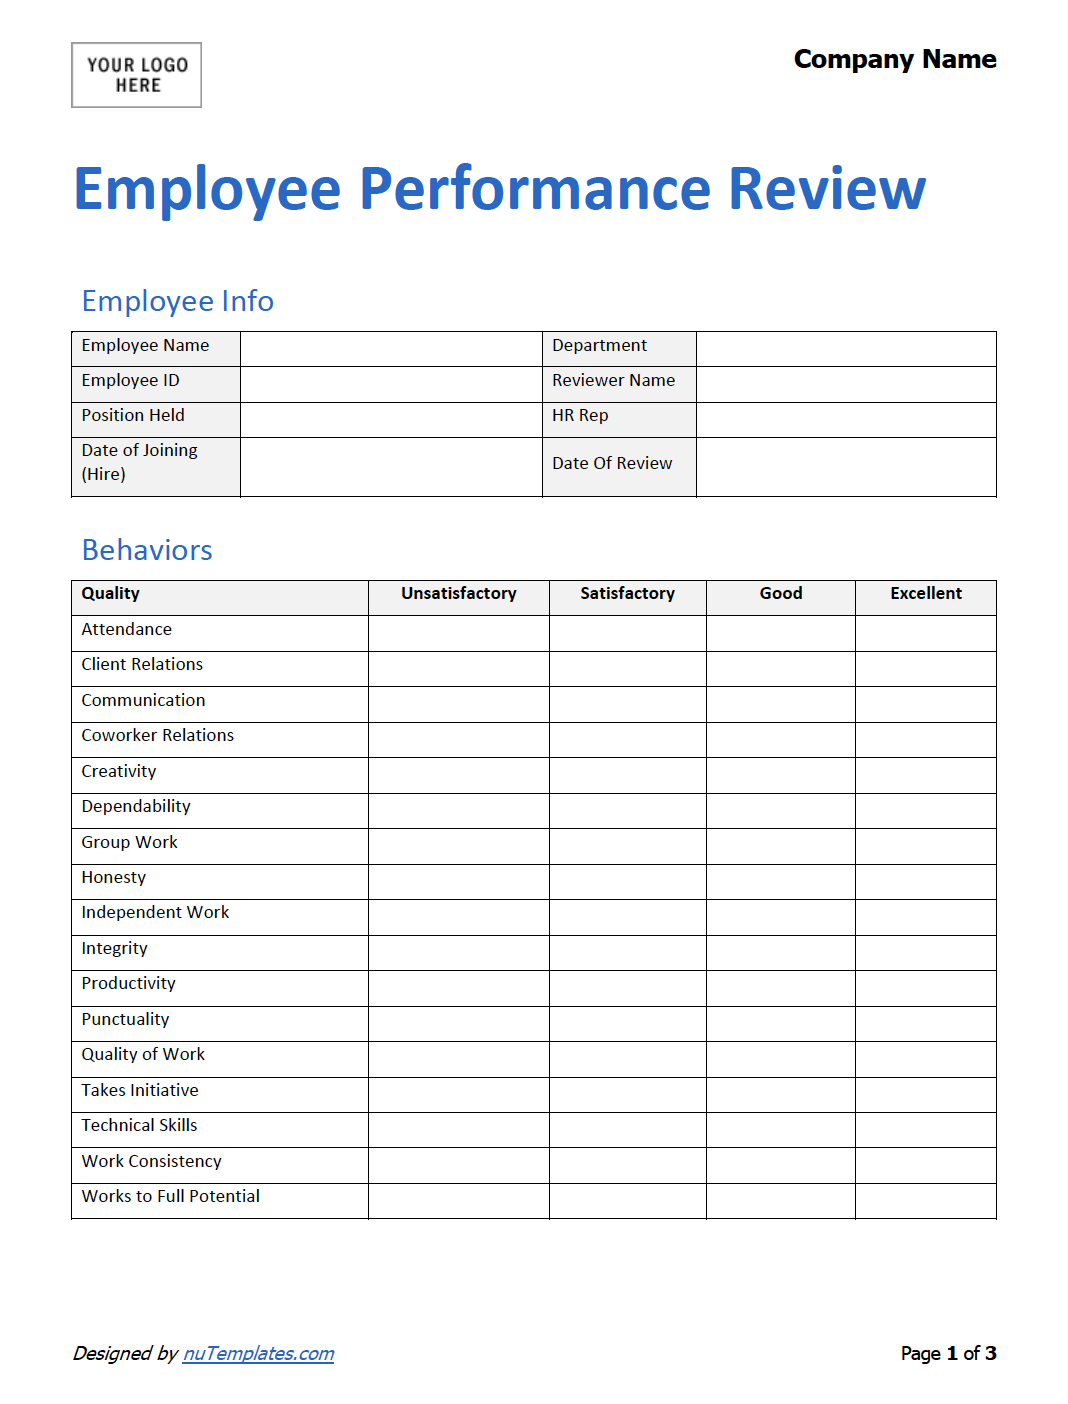 Employee-Performance-Review-Template-jpg